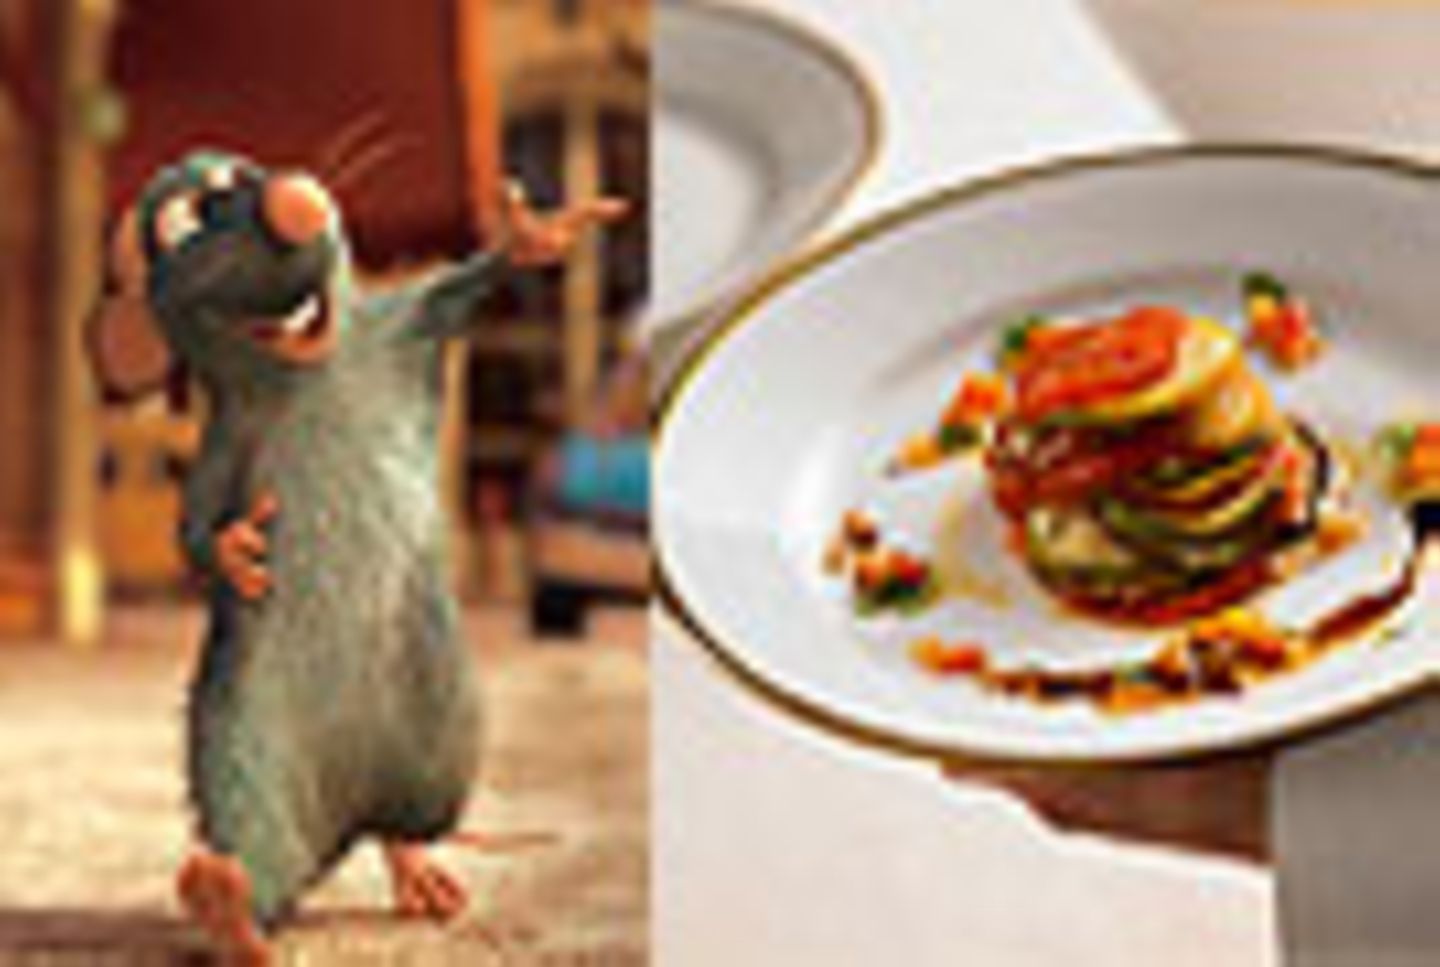 Animationsfilm "Ratatouille": Die Rezepte